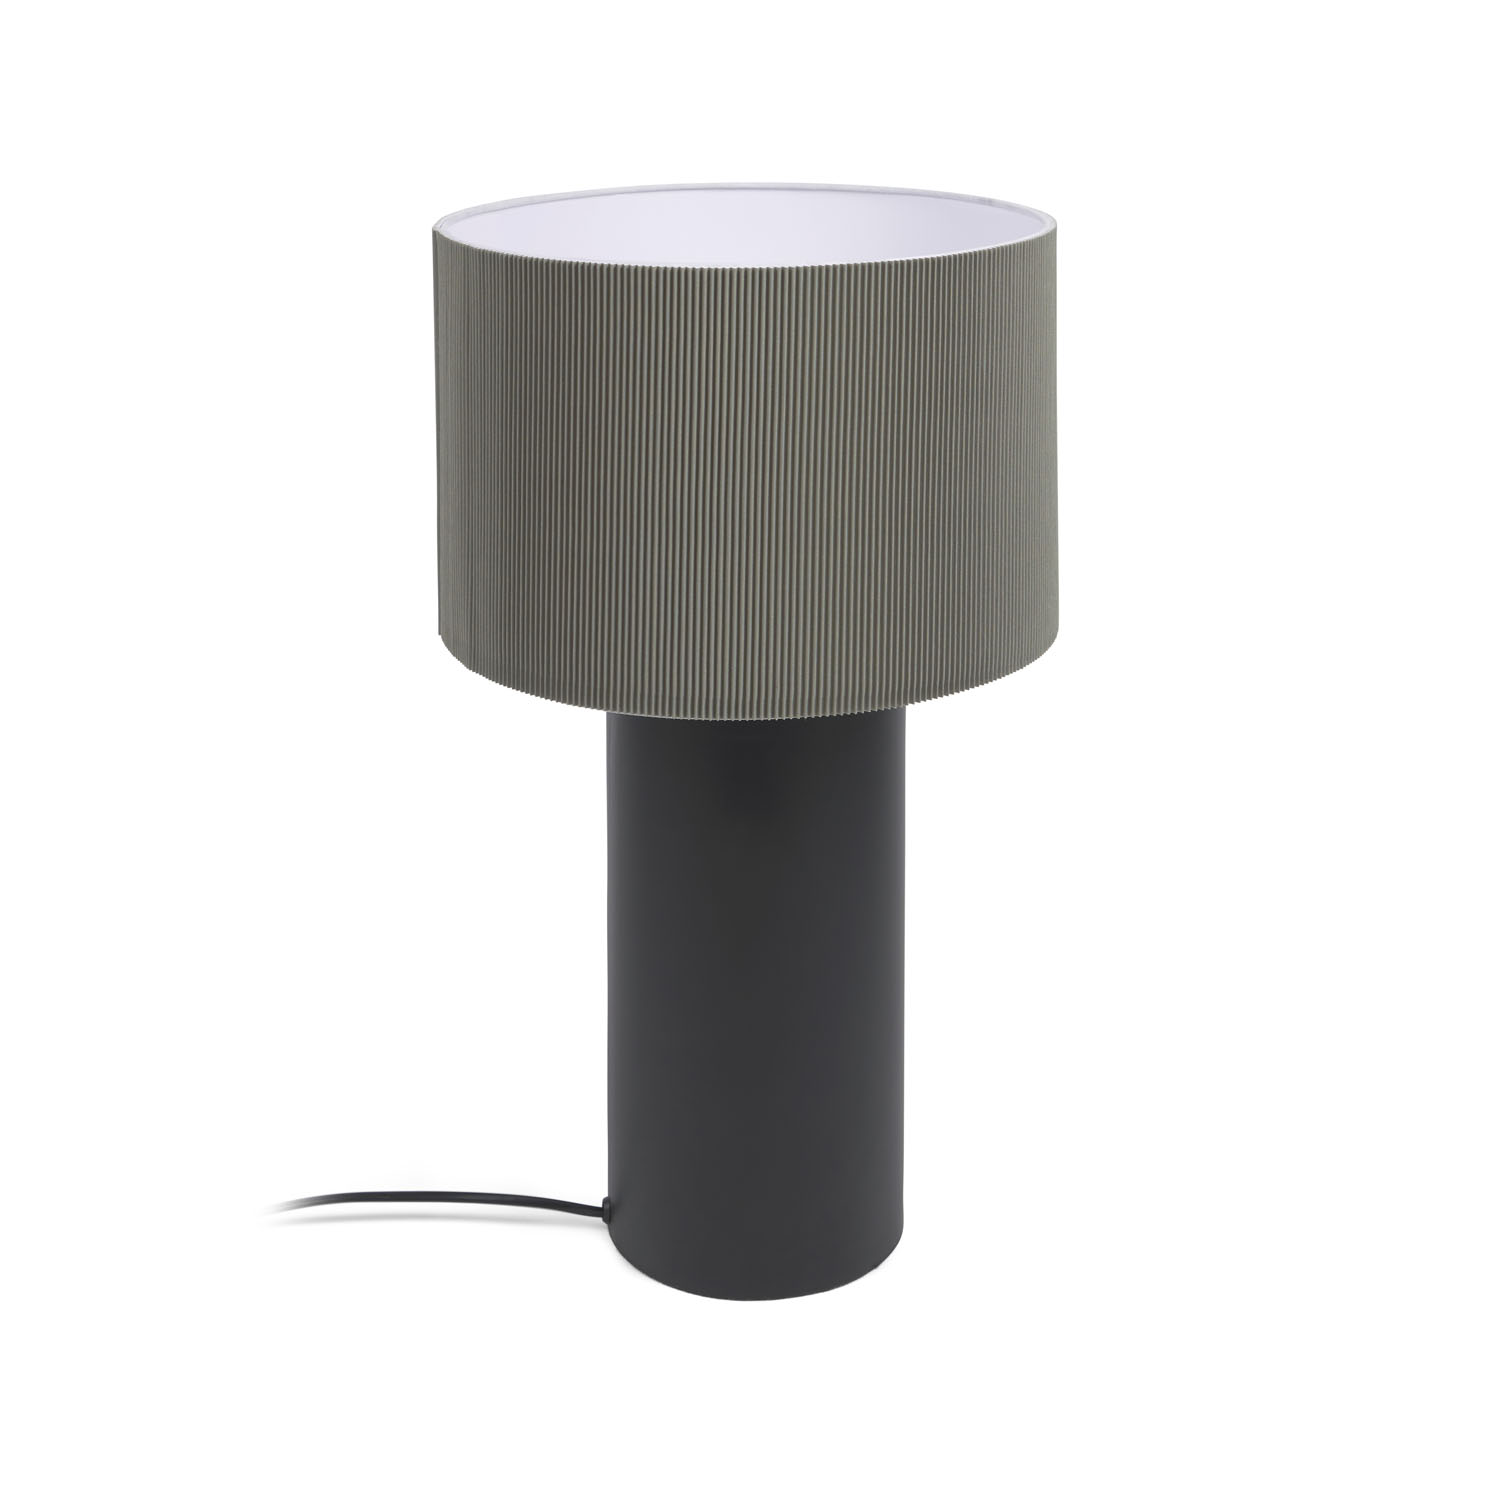 LAFORMA Domicina bordlampe, rund - grå linned og sort metal (Ø30)